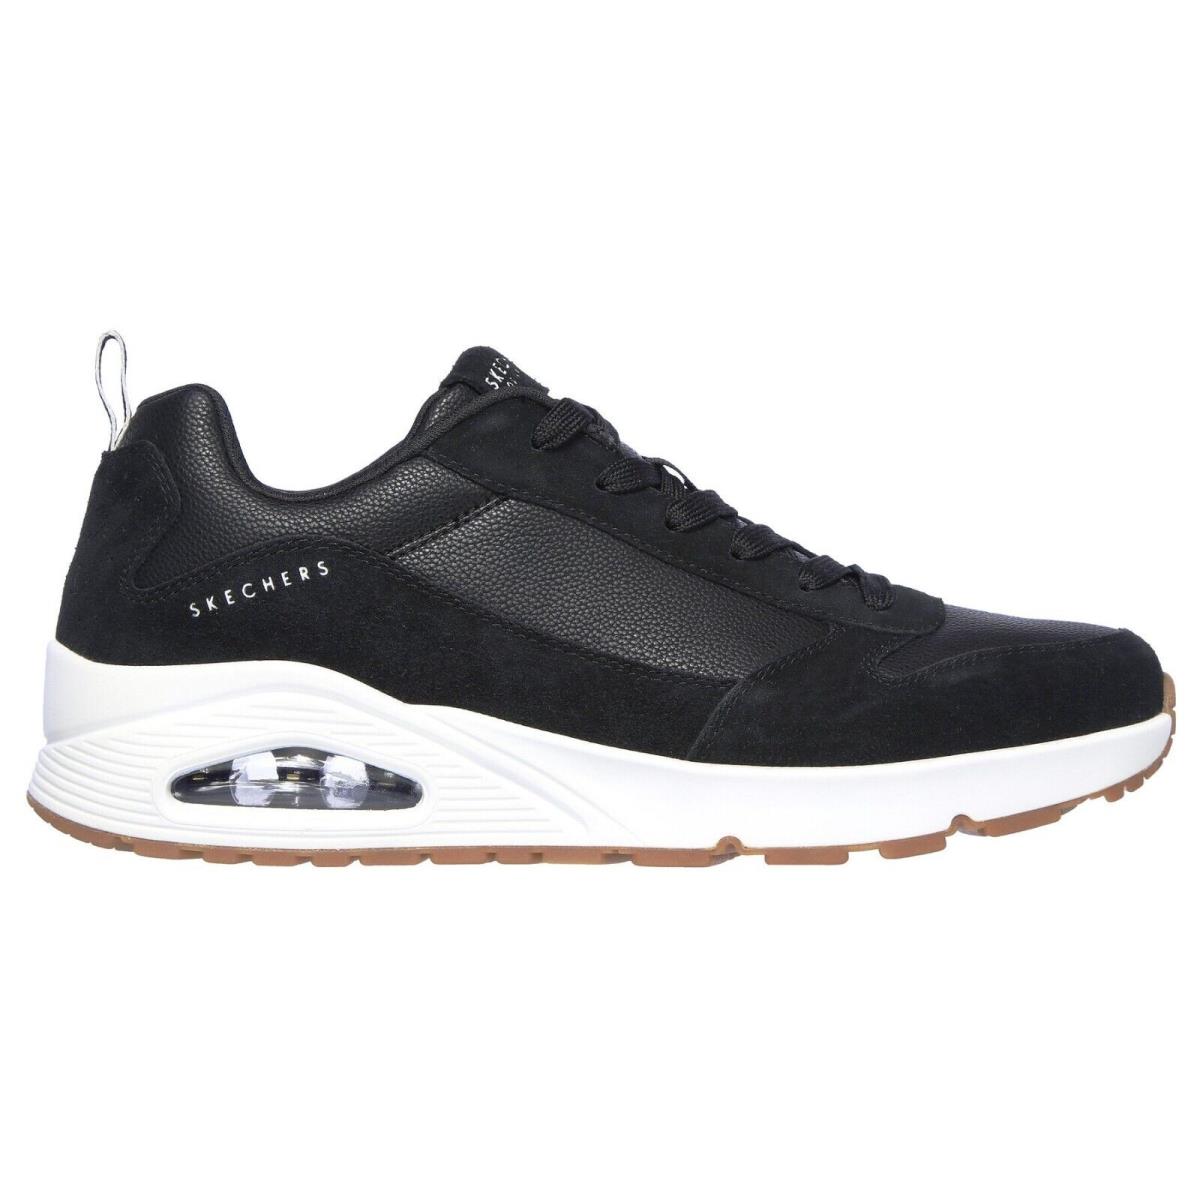 Skechers shoes Uno Stacre - Black/White 8